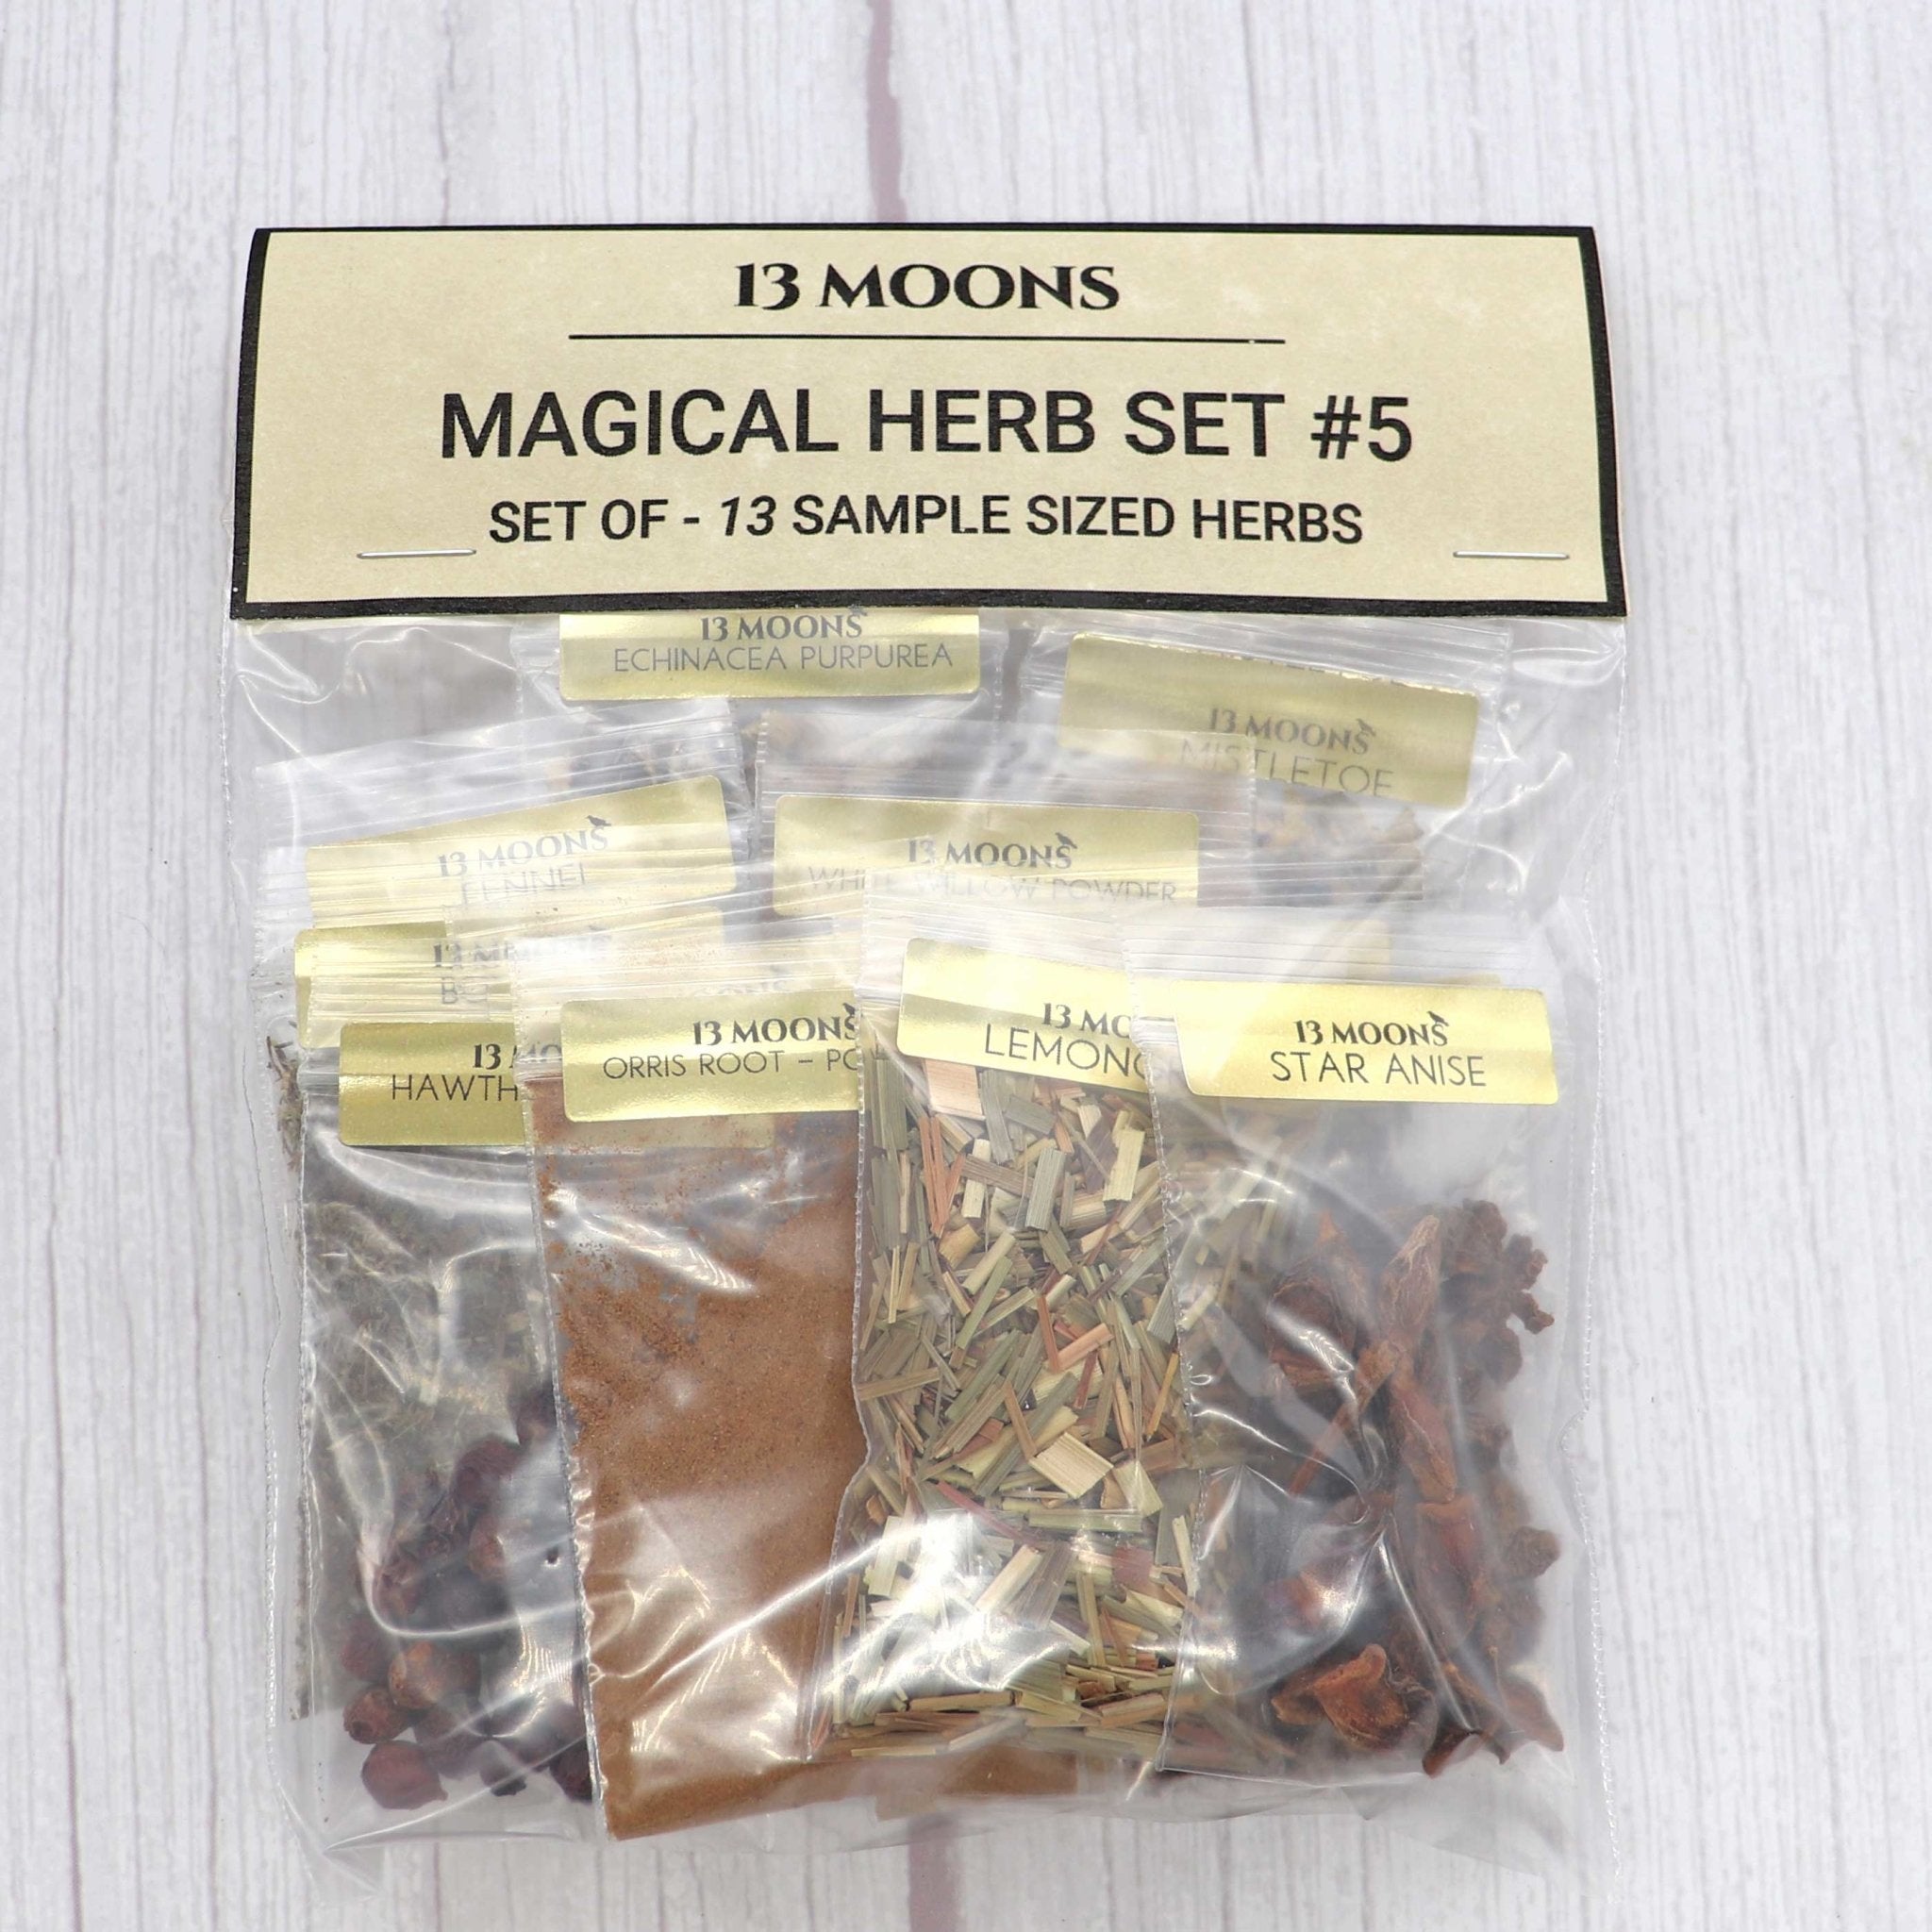 Magical Herb Set #5 - 13 Moons